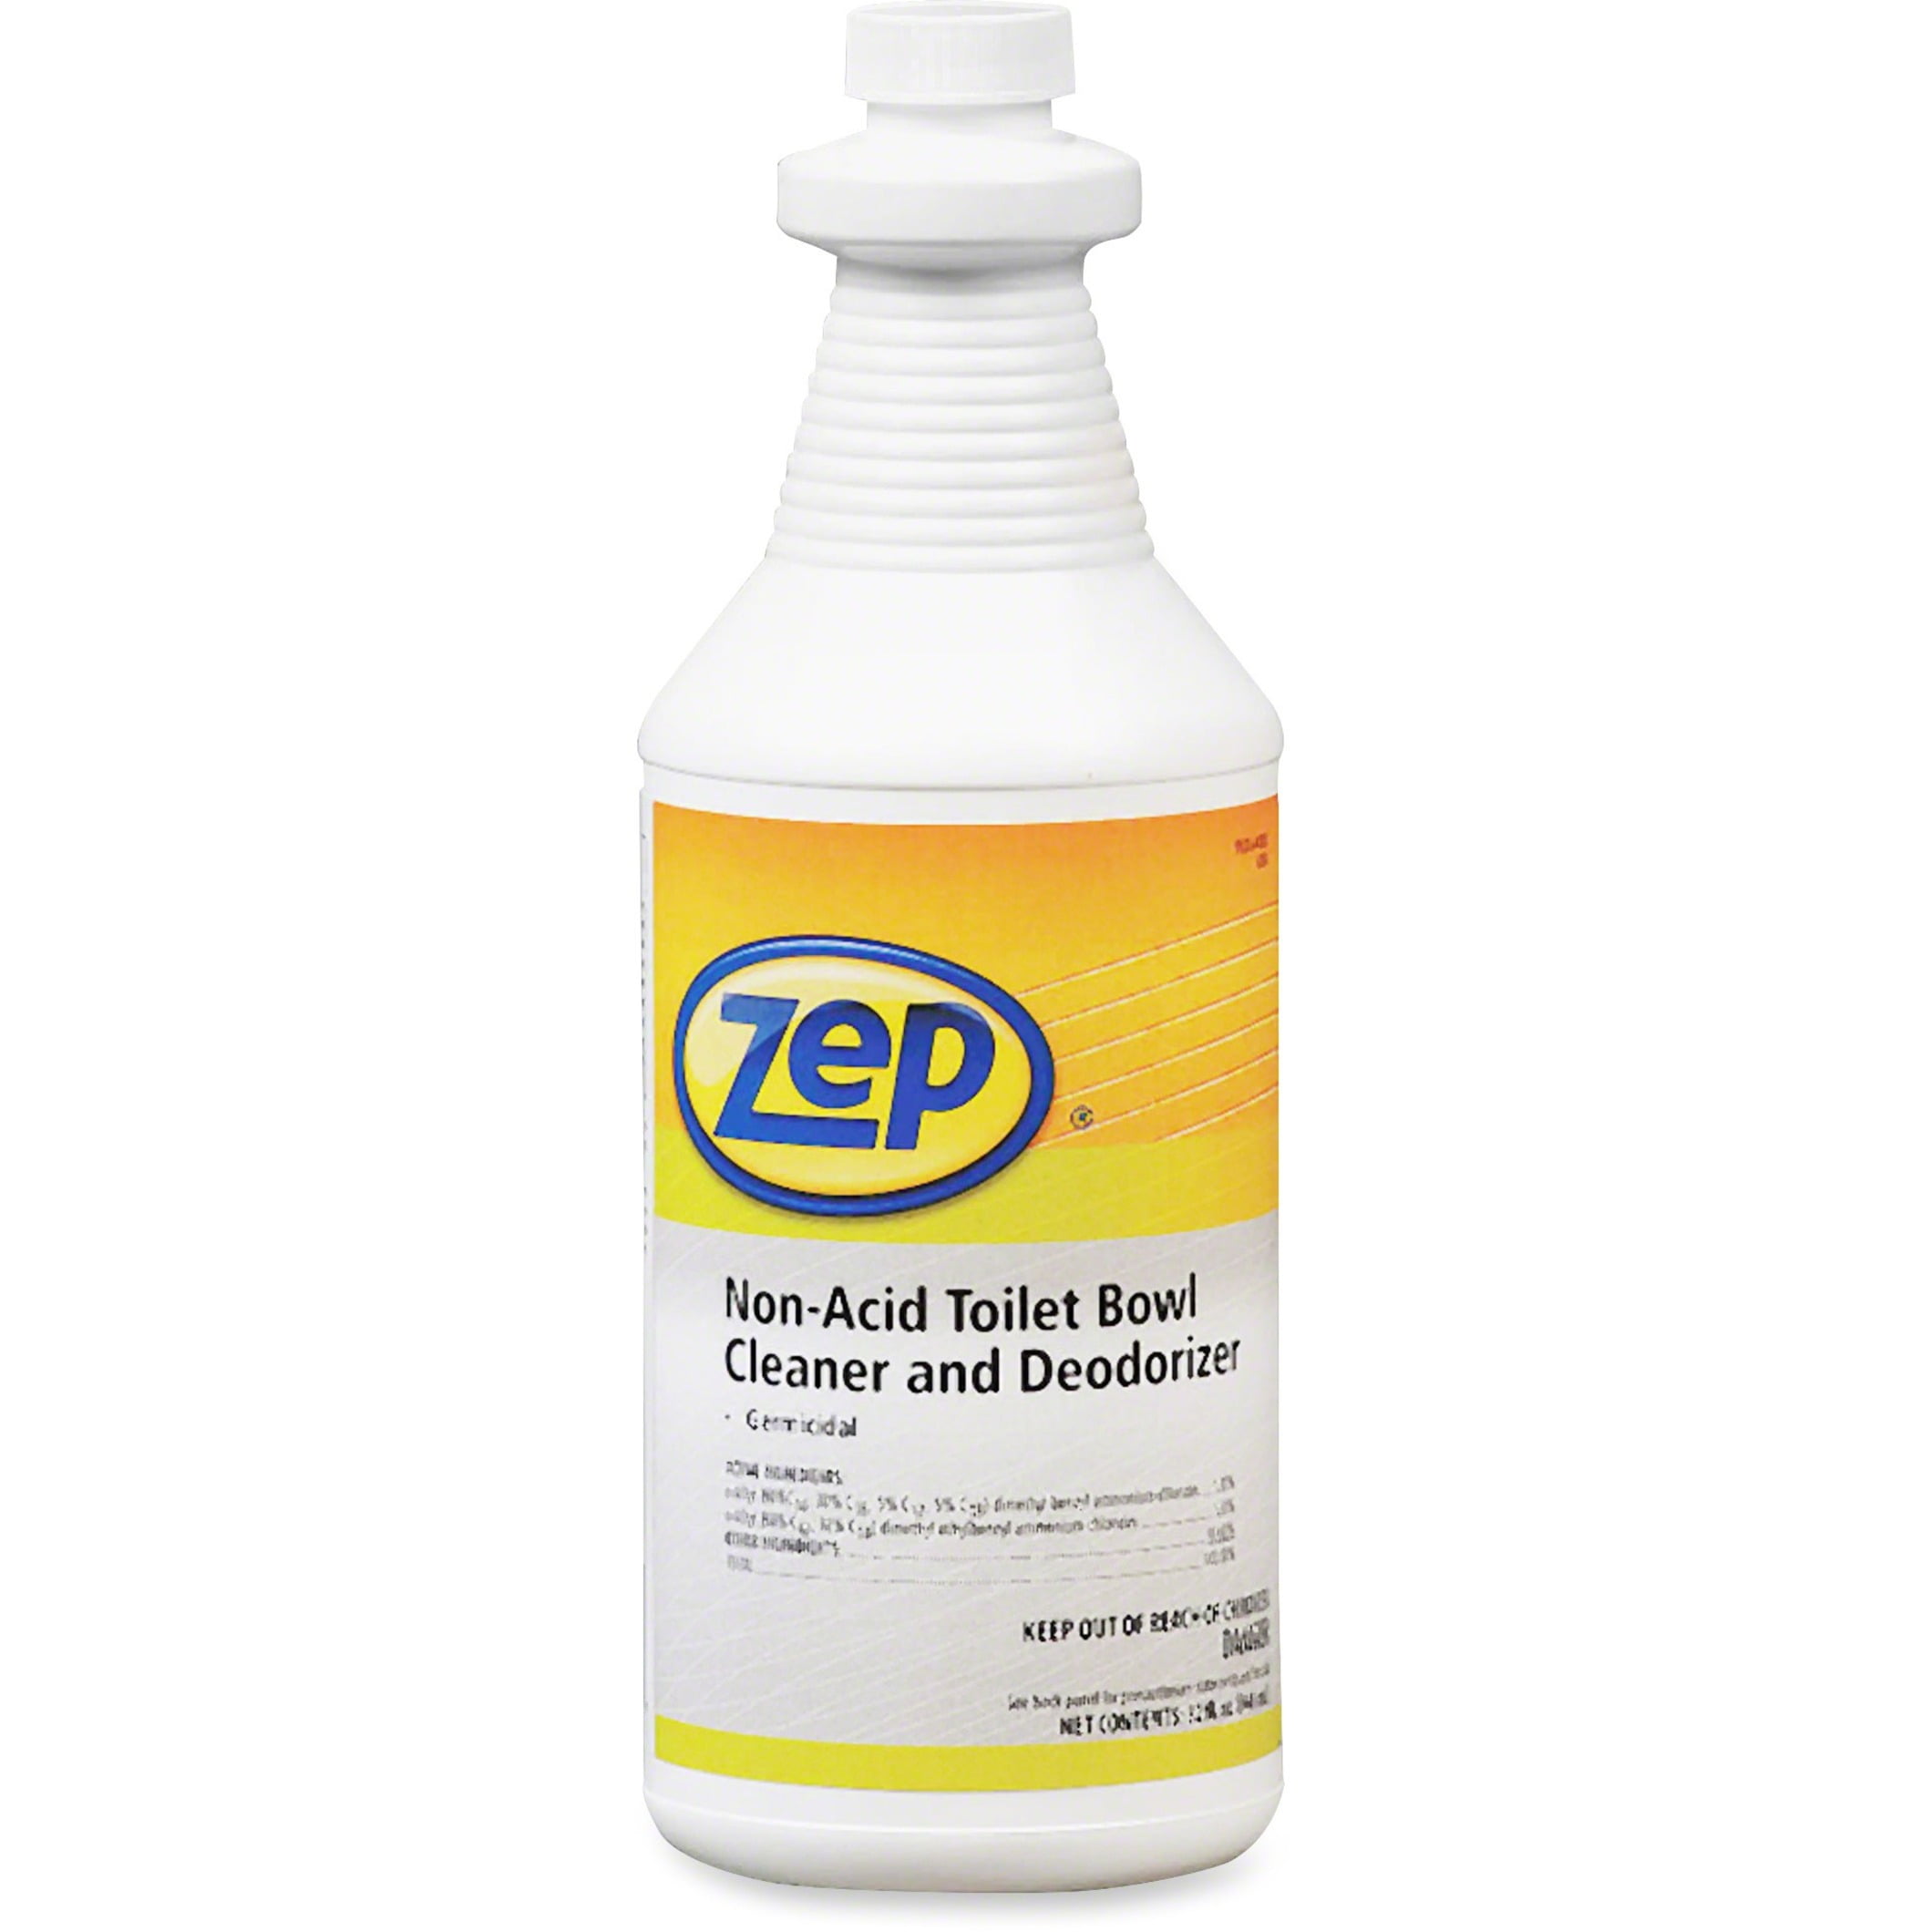 Zep Professional Non-Acid Toilet Bowl Cleaner/Deodorizer